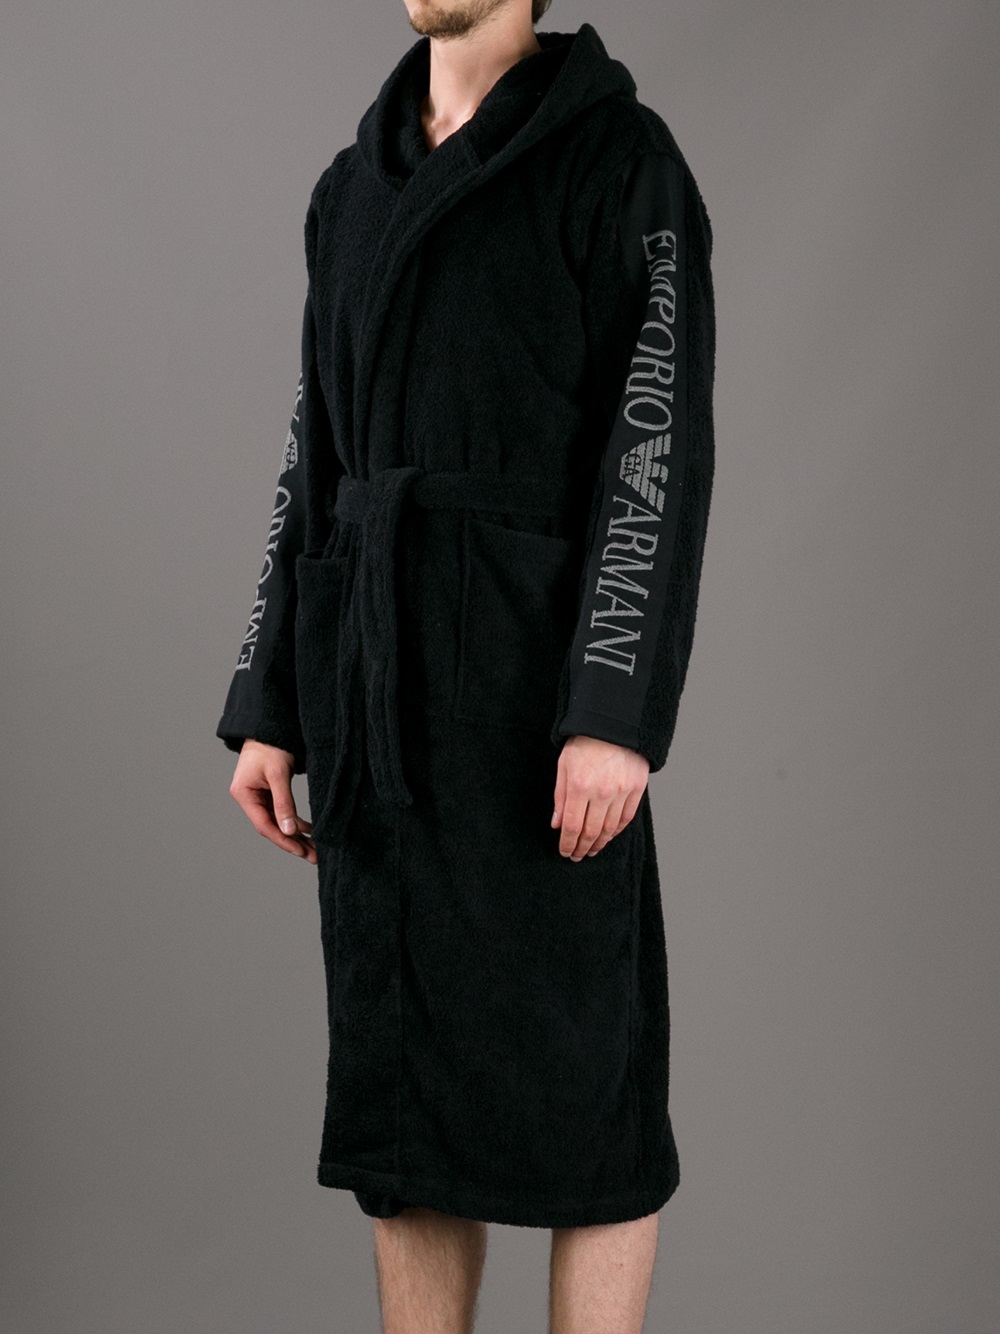 emporio armani bathrobe